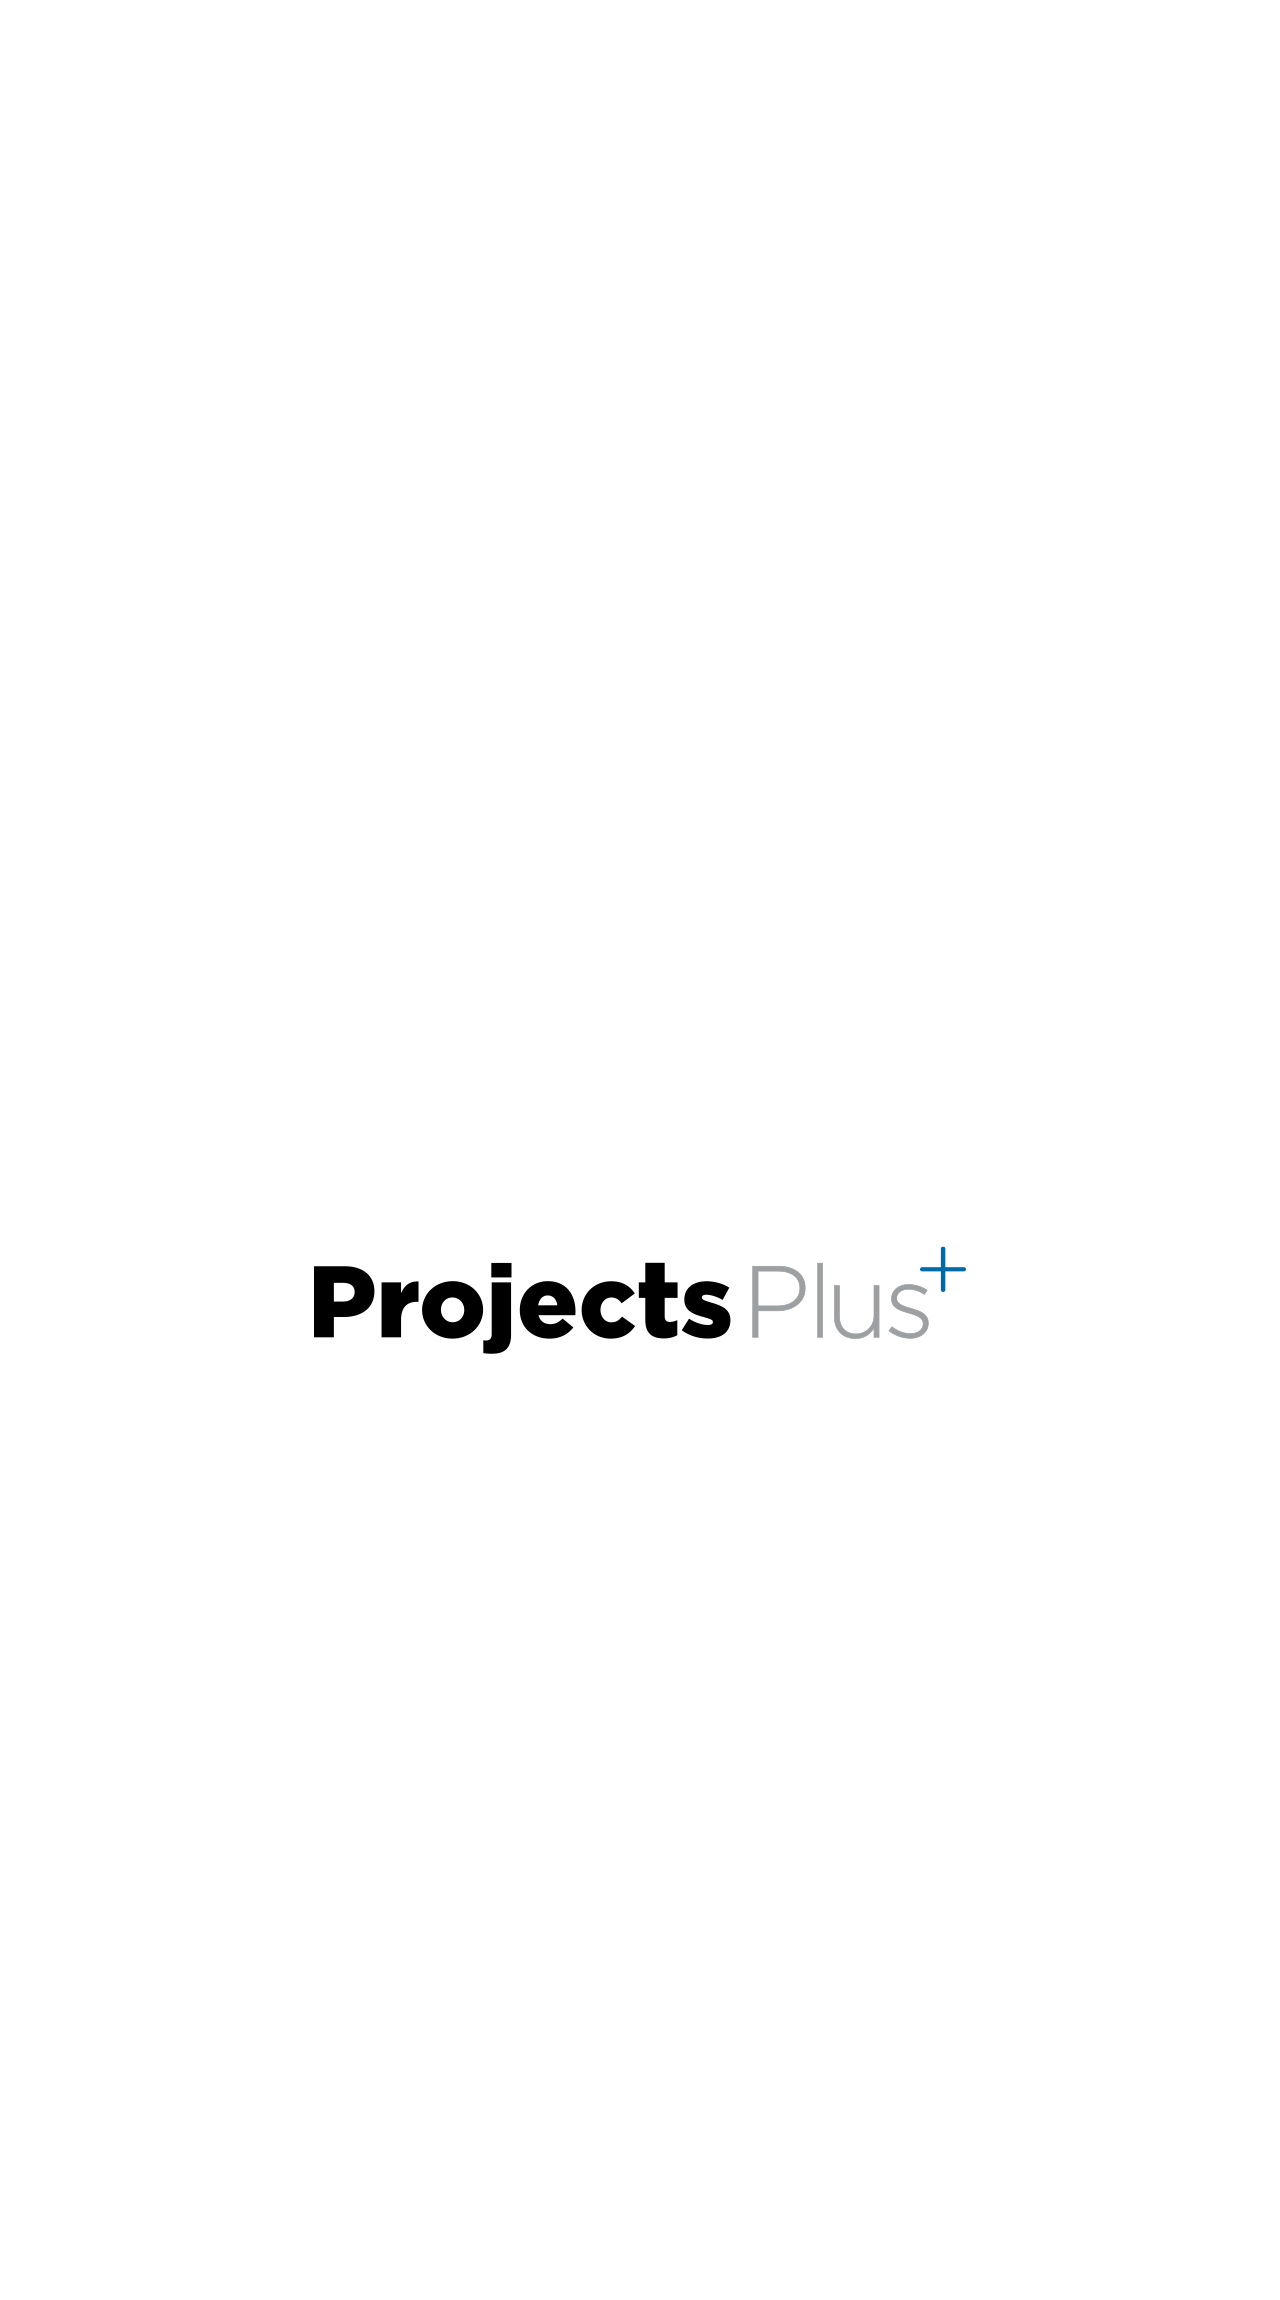 Final ProjectsPlus Banner